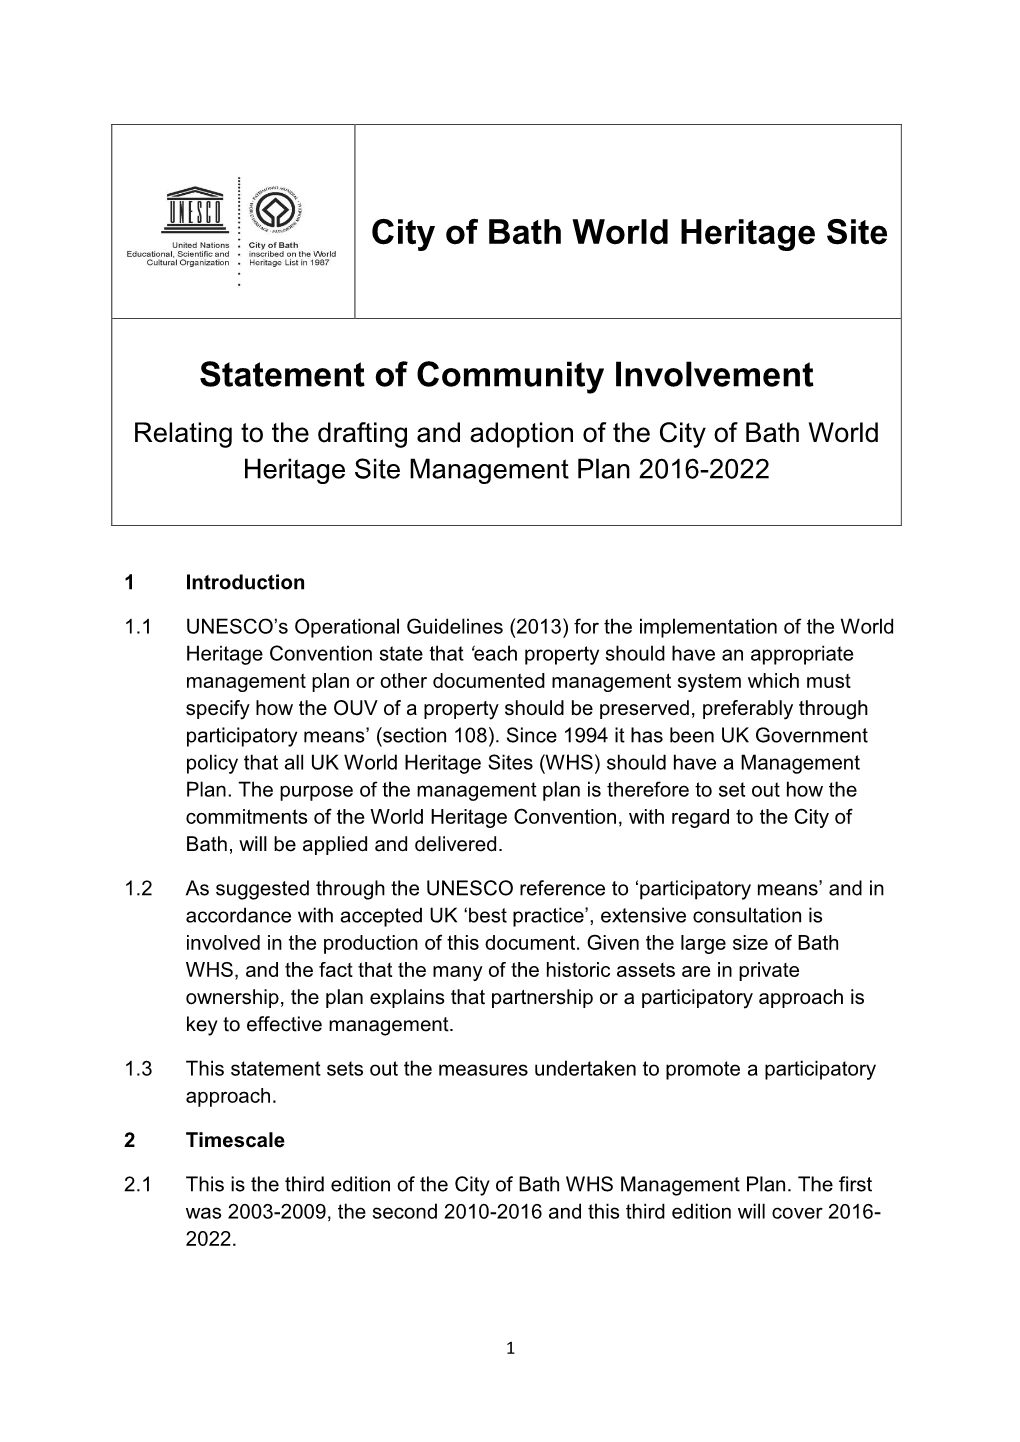 City of Bath World Heritage Site Statement of Community Involvement